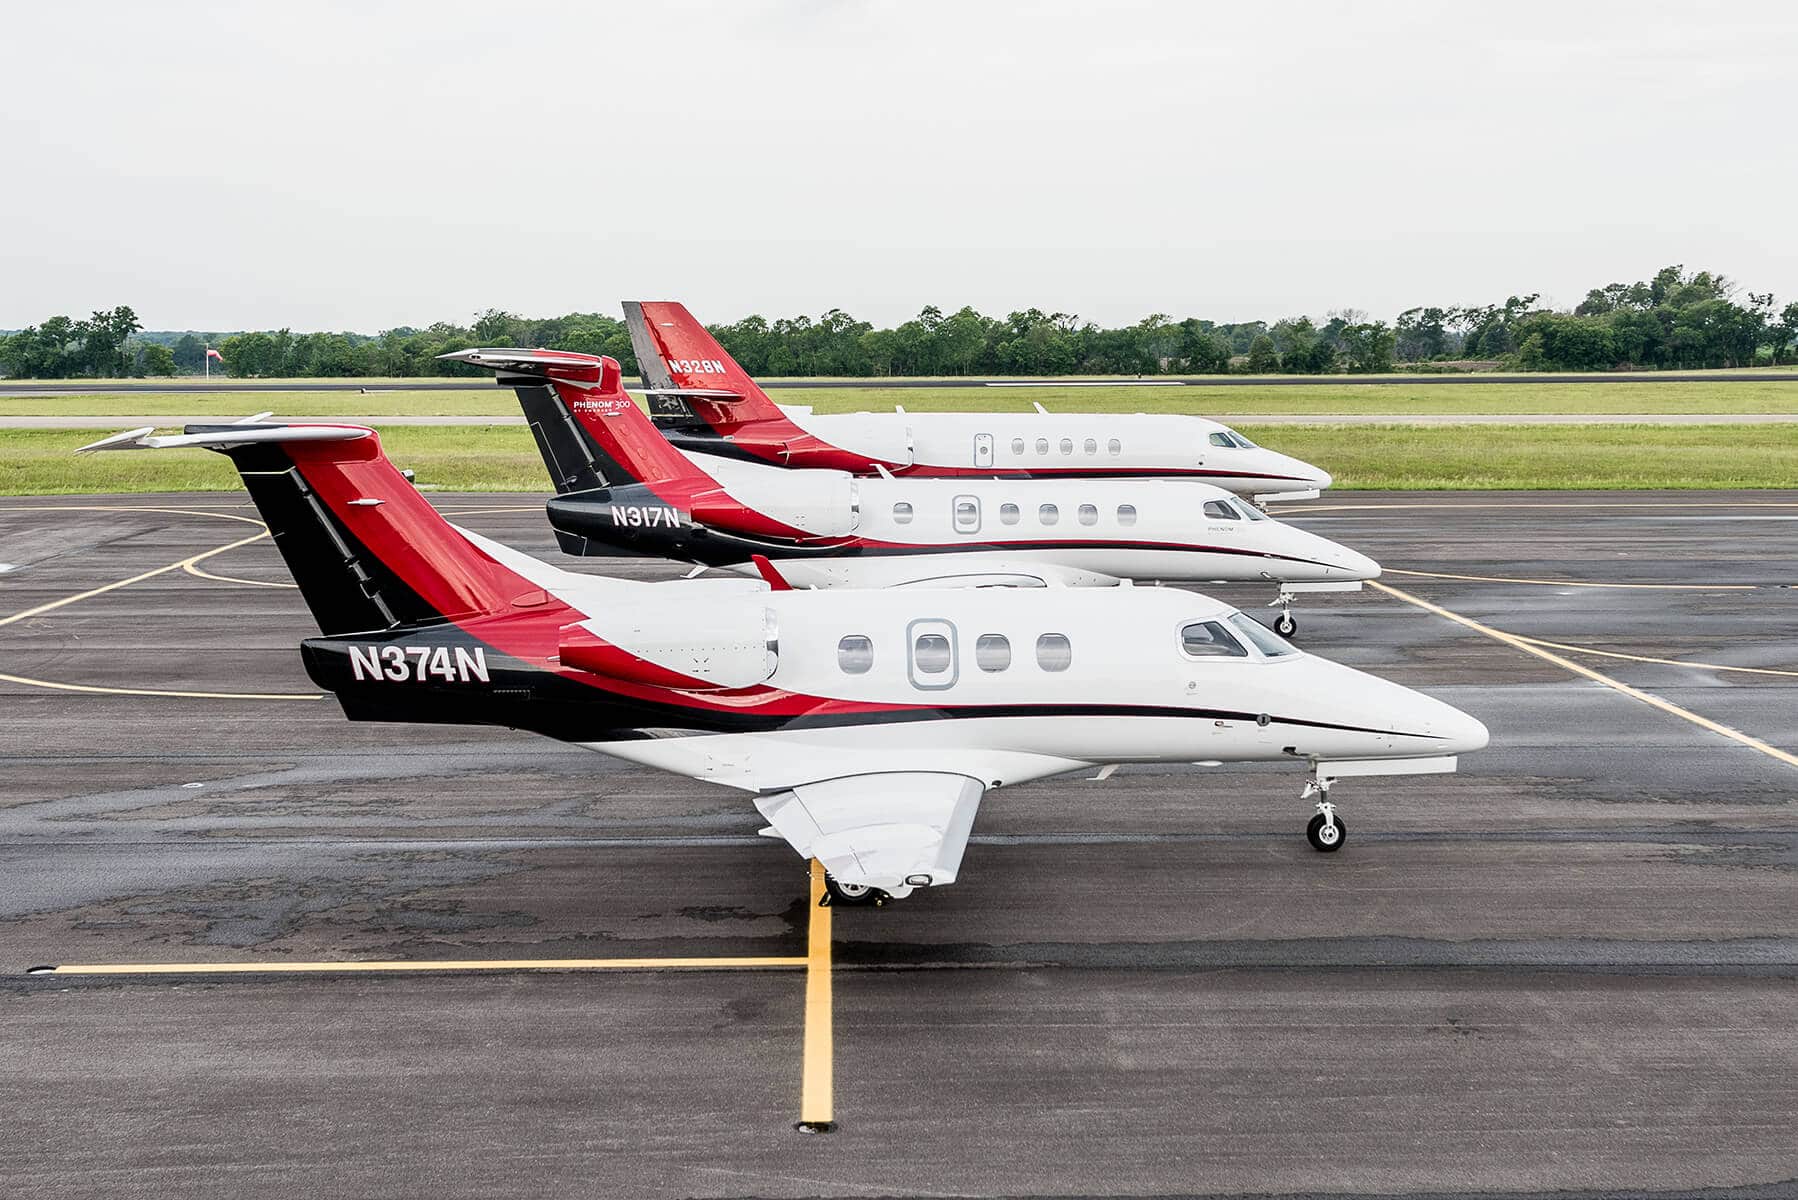 Embraer Phenom 100, Embraer Phenom 300, and Cessna Citation Latitude on Tarmac